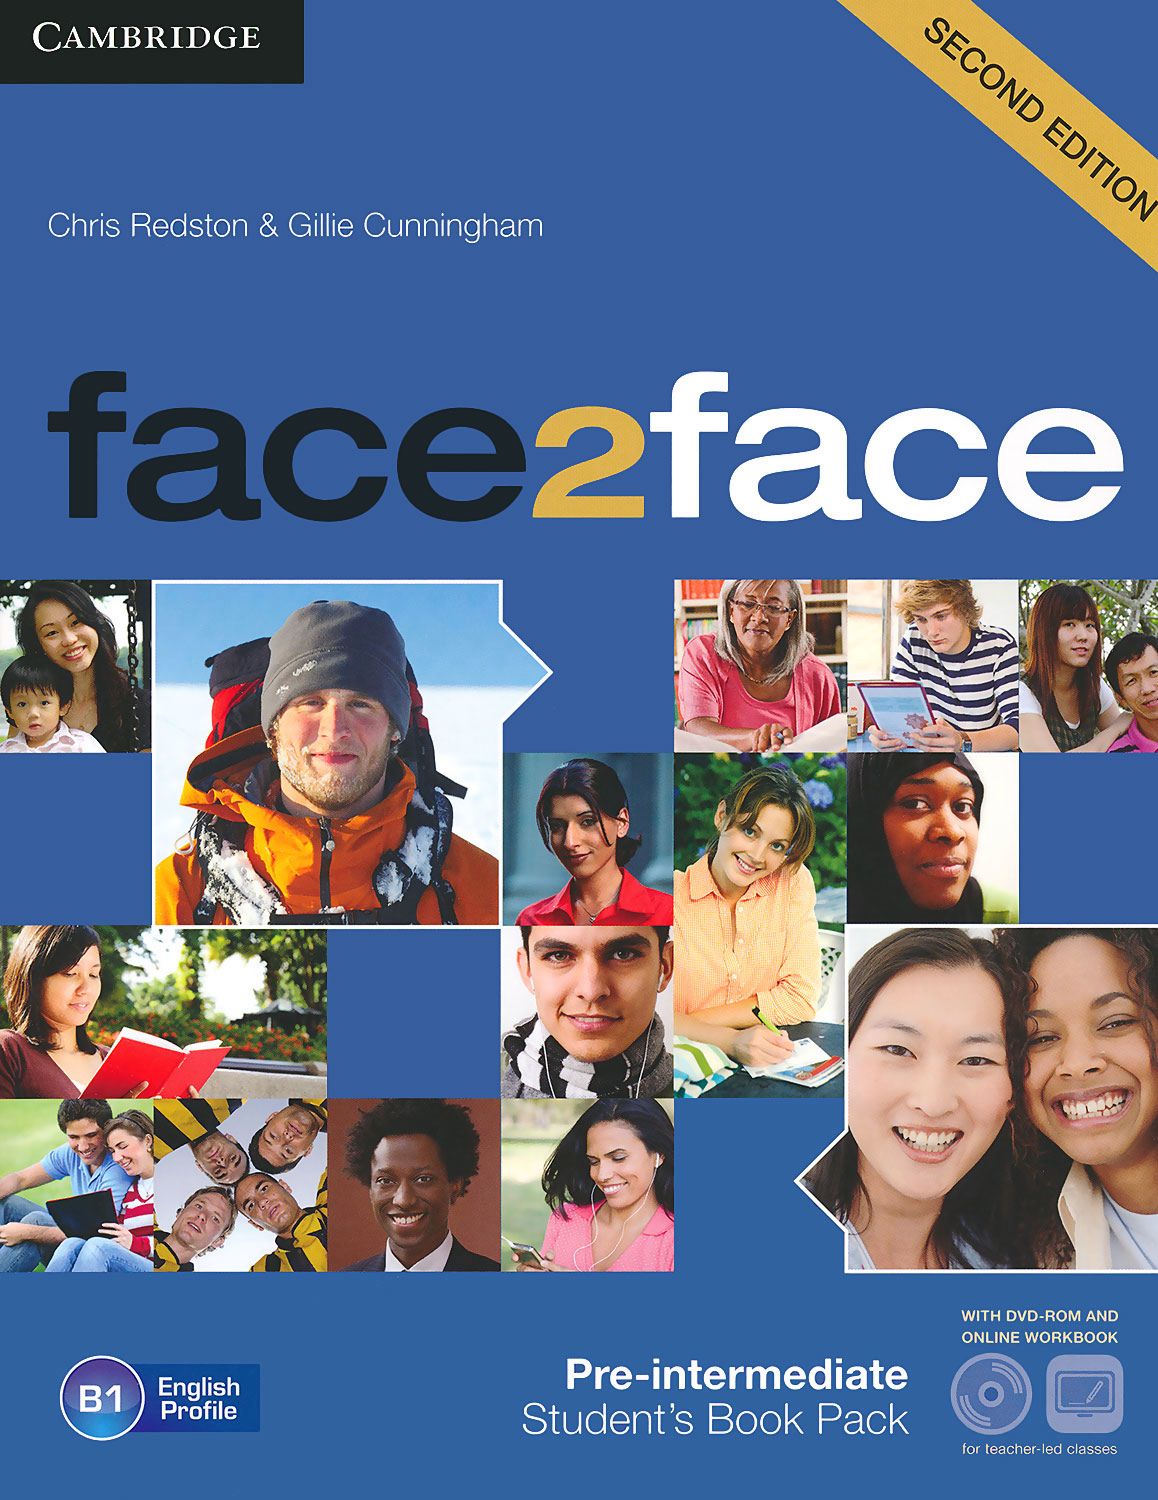 face2face pdf